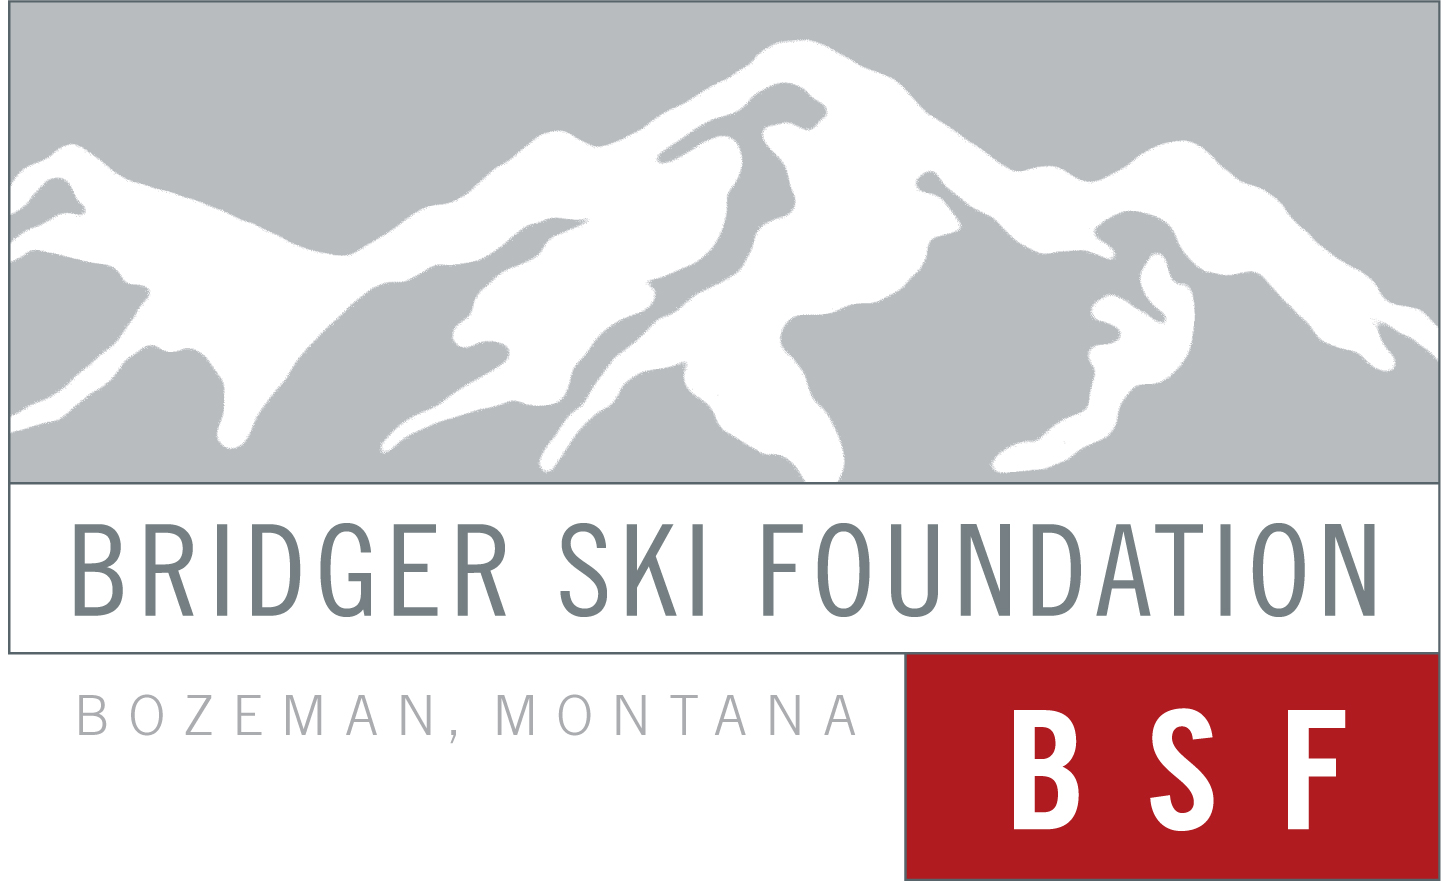 Bridger Ski Foundation to Host Para Nordic Skiing NorAm and Nationals